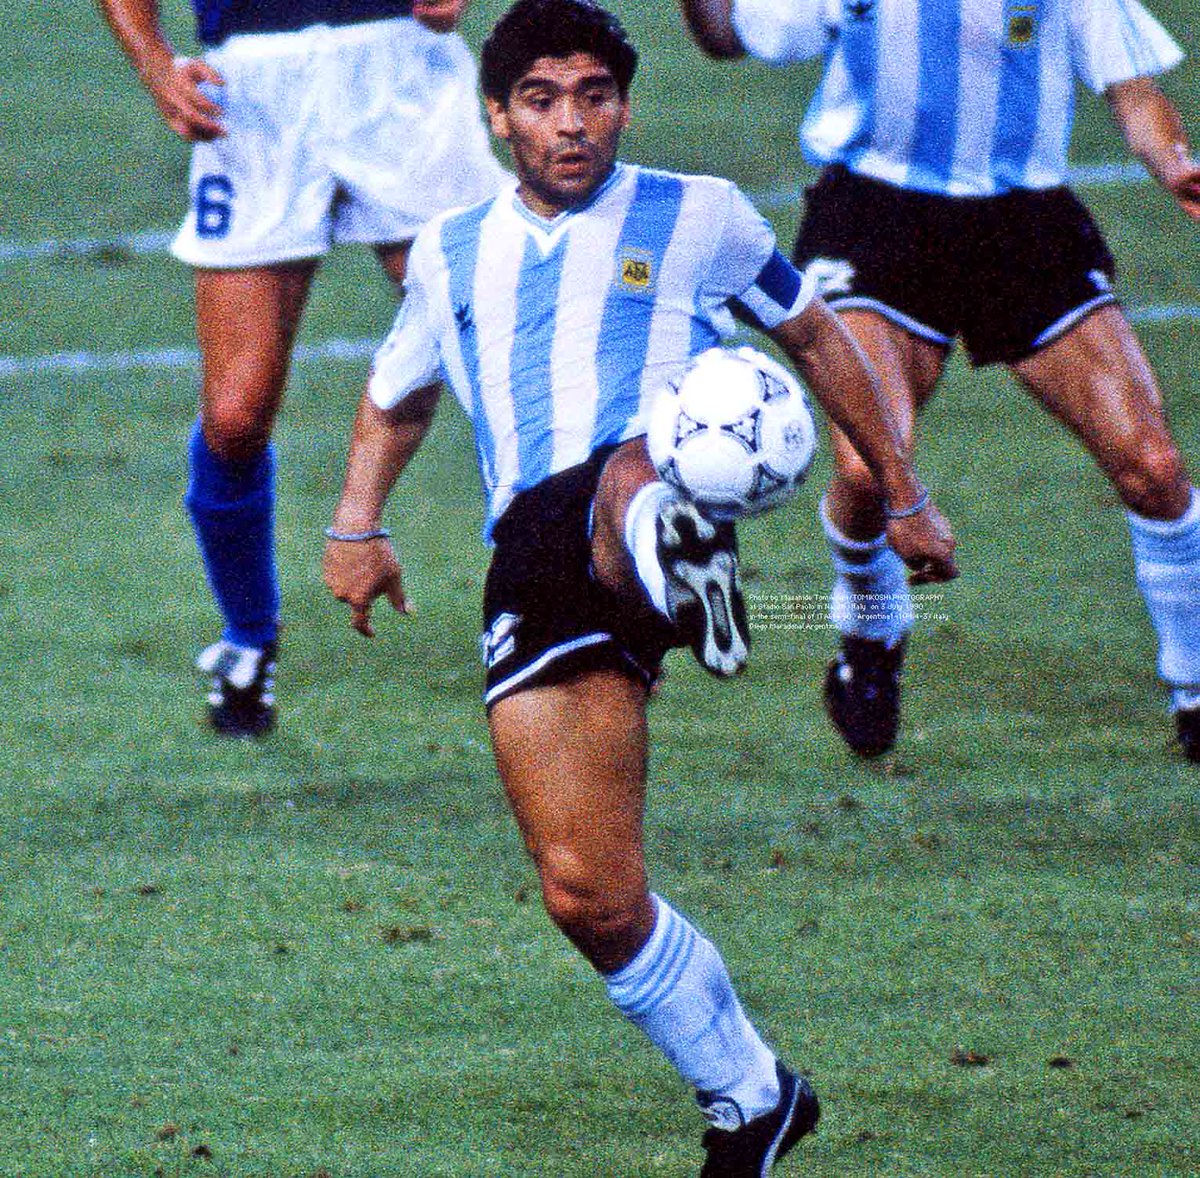 tphoto в Твиттере: "Diego Maradona(Argentina) in the semi-fi